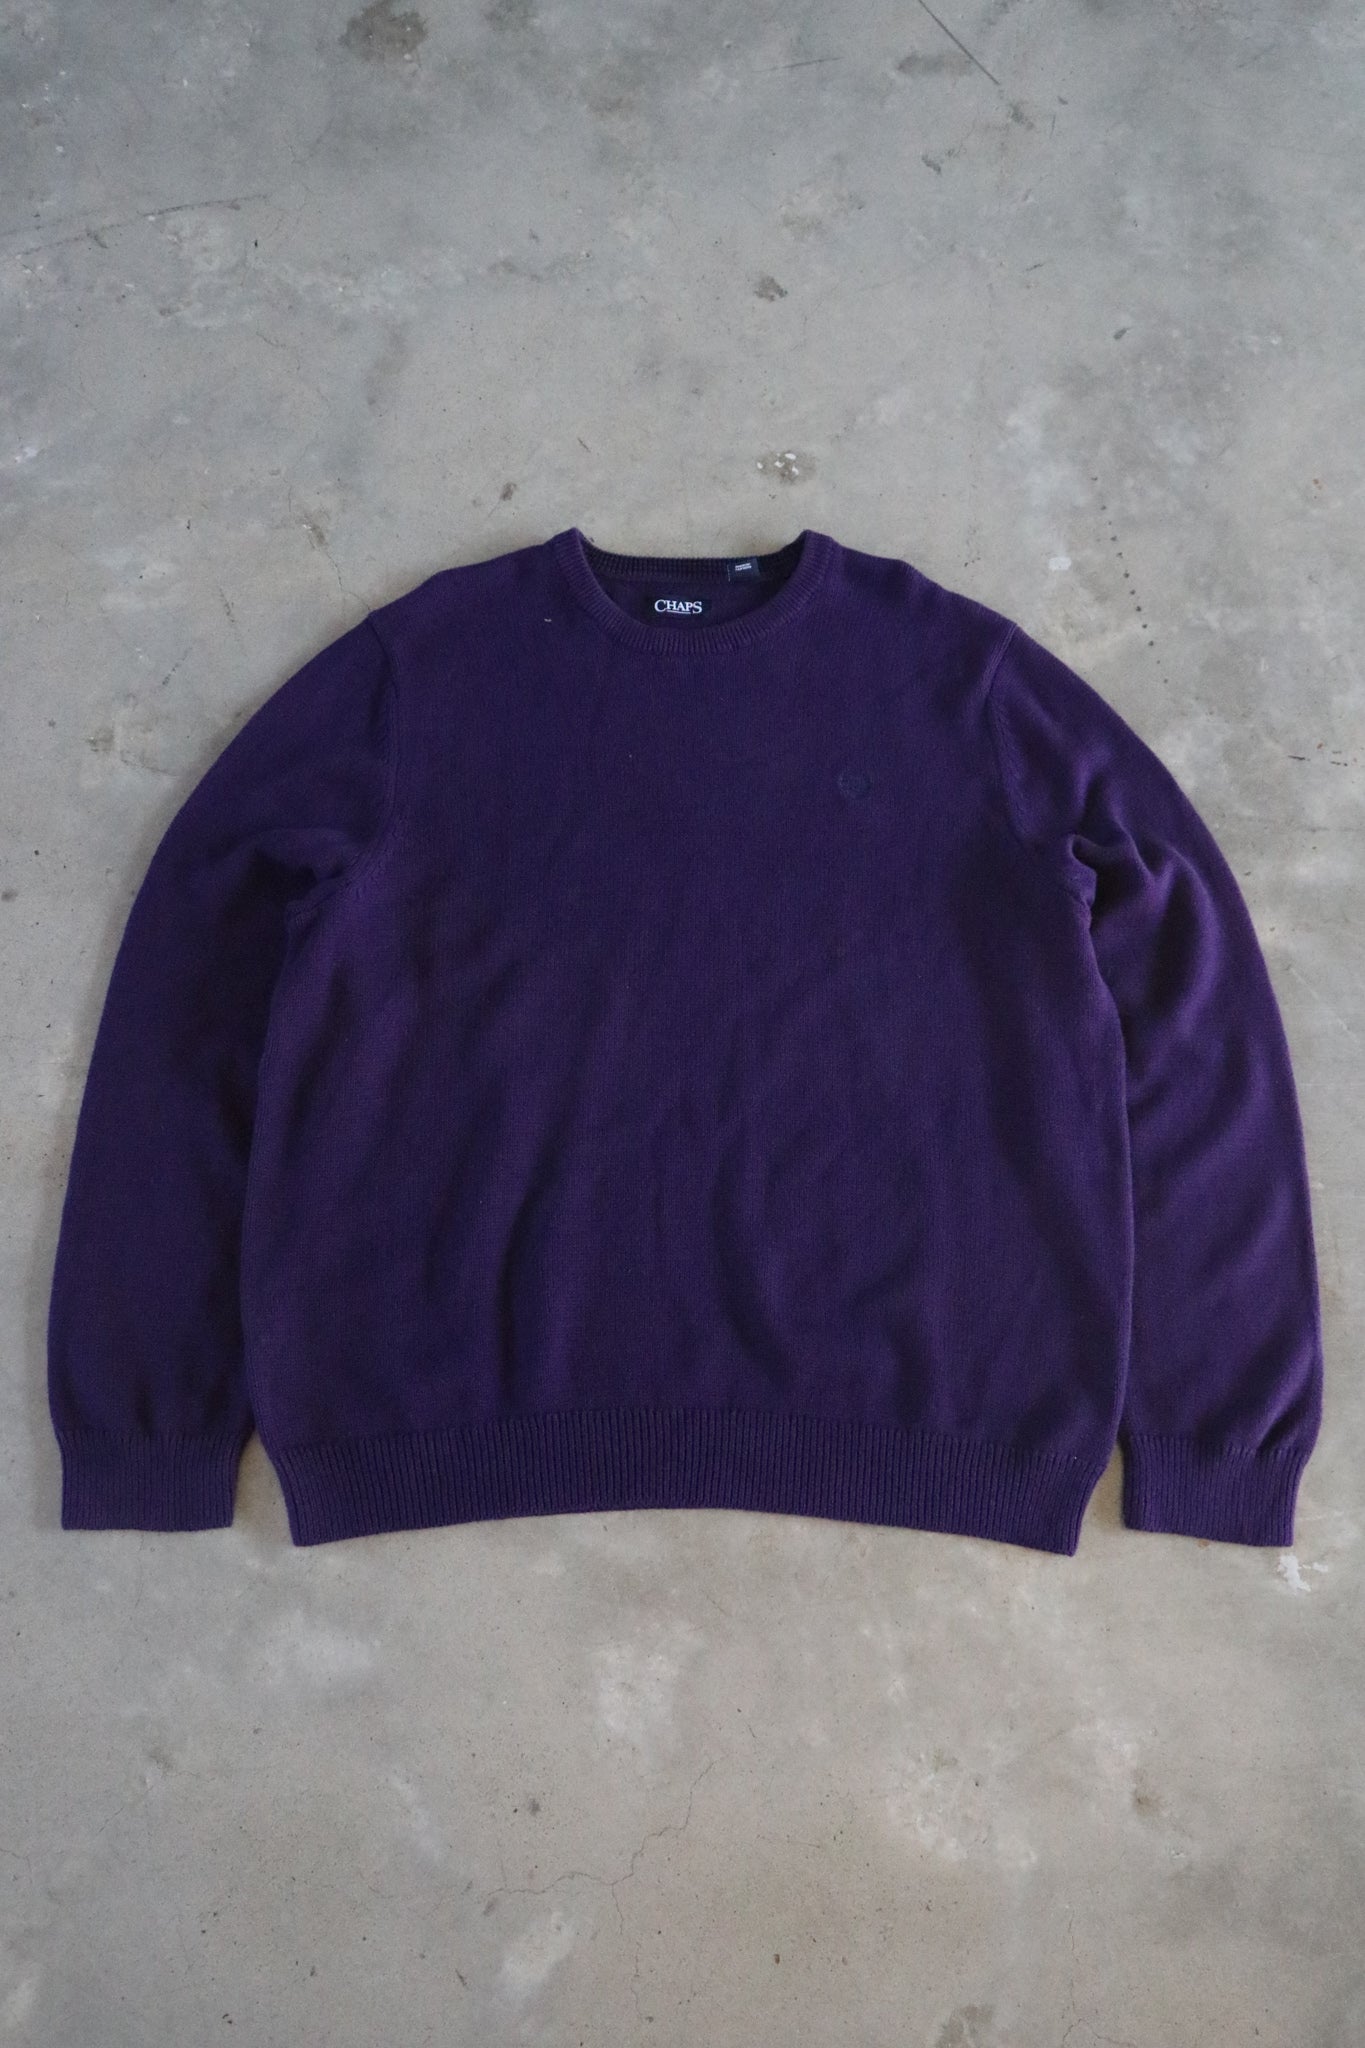 Vintage Ralph Lauren Chaps Knit Sweater XXL